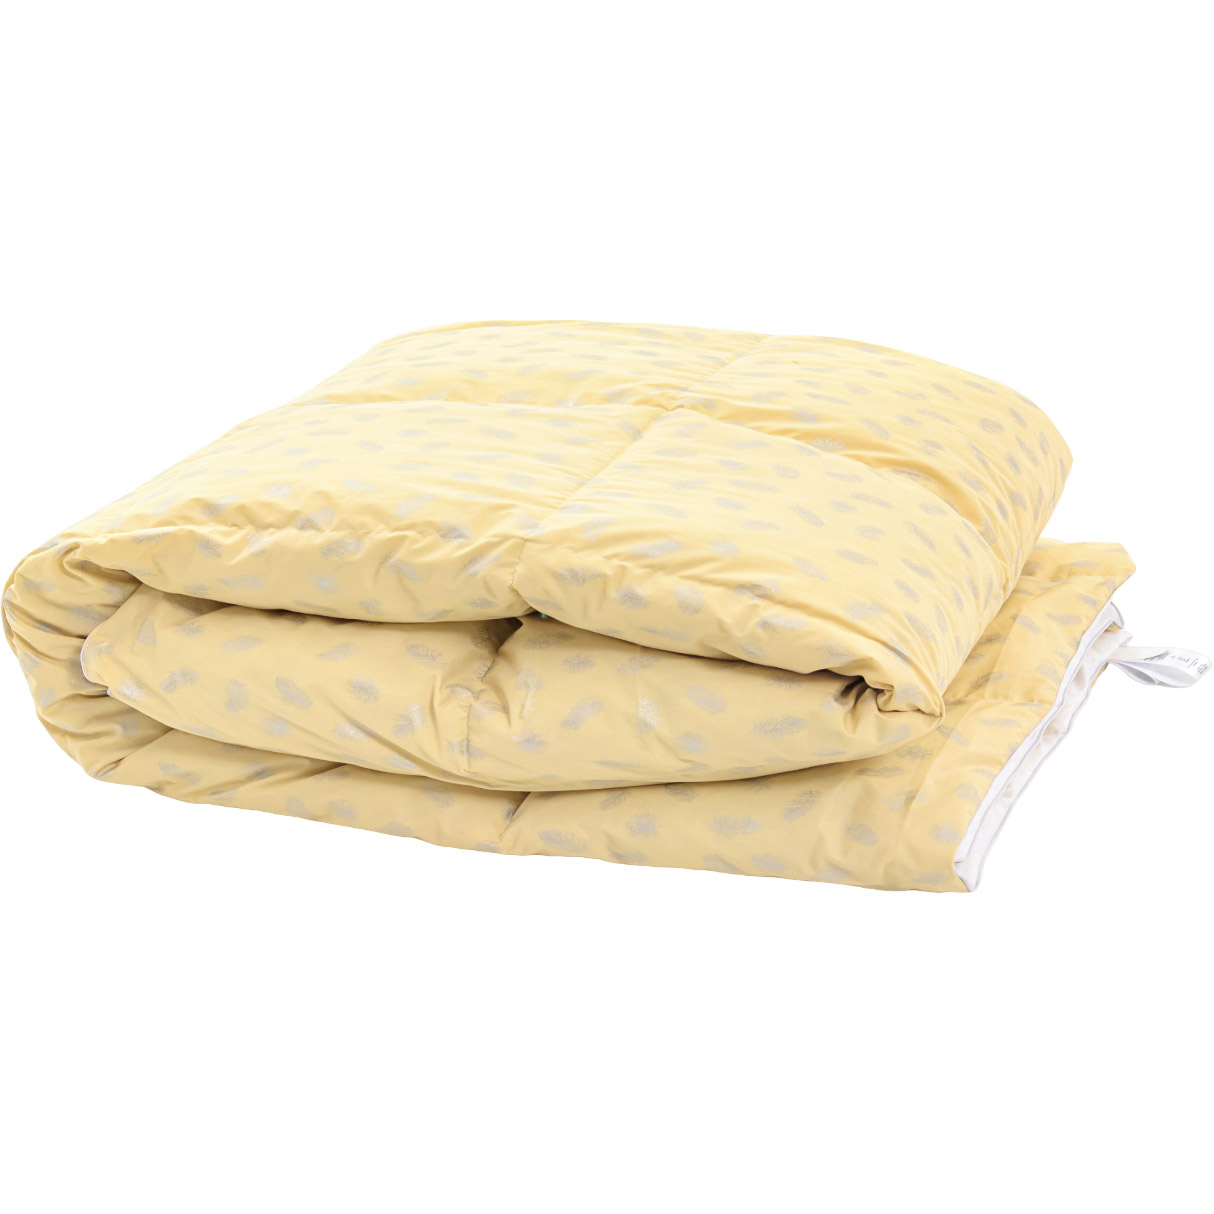 Одеяло пуховое MirSon Karmen №1827 Bio-Beige, 90% пух, полуторное, 215x155, бежевое (2200003012842) - фото 1